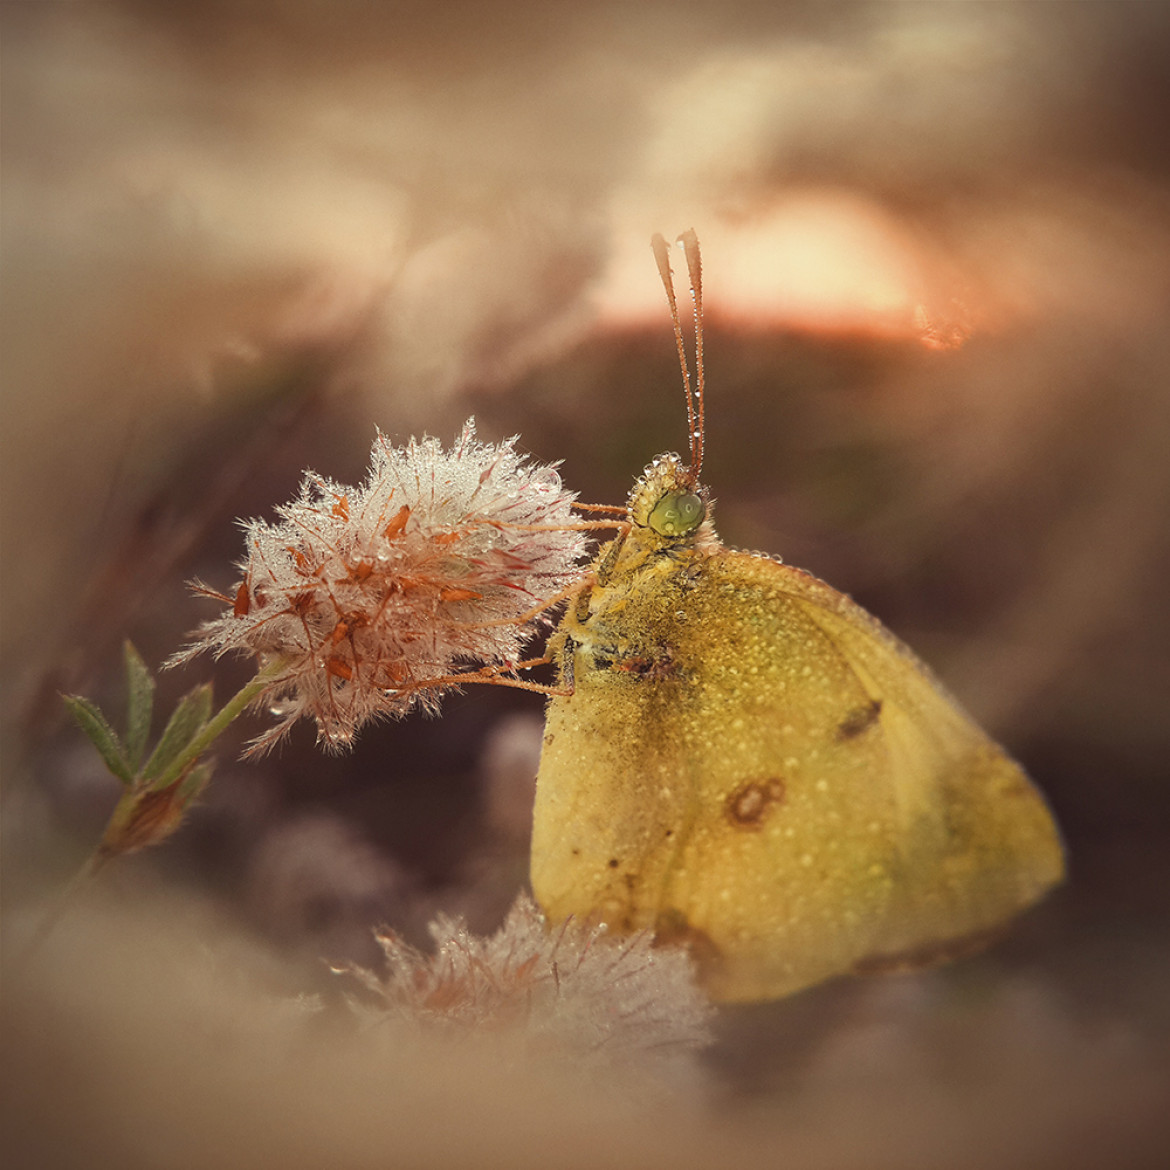 fot. Natalya Peshkova, "Morning Dream of a Butterfly", 1. miejsce w kategorii Macro & Details